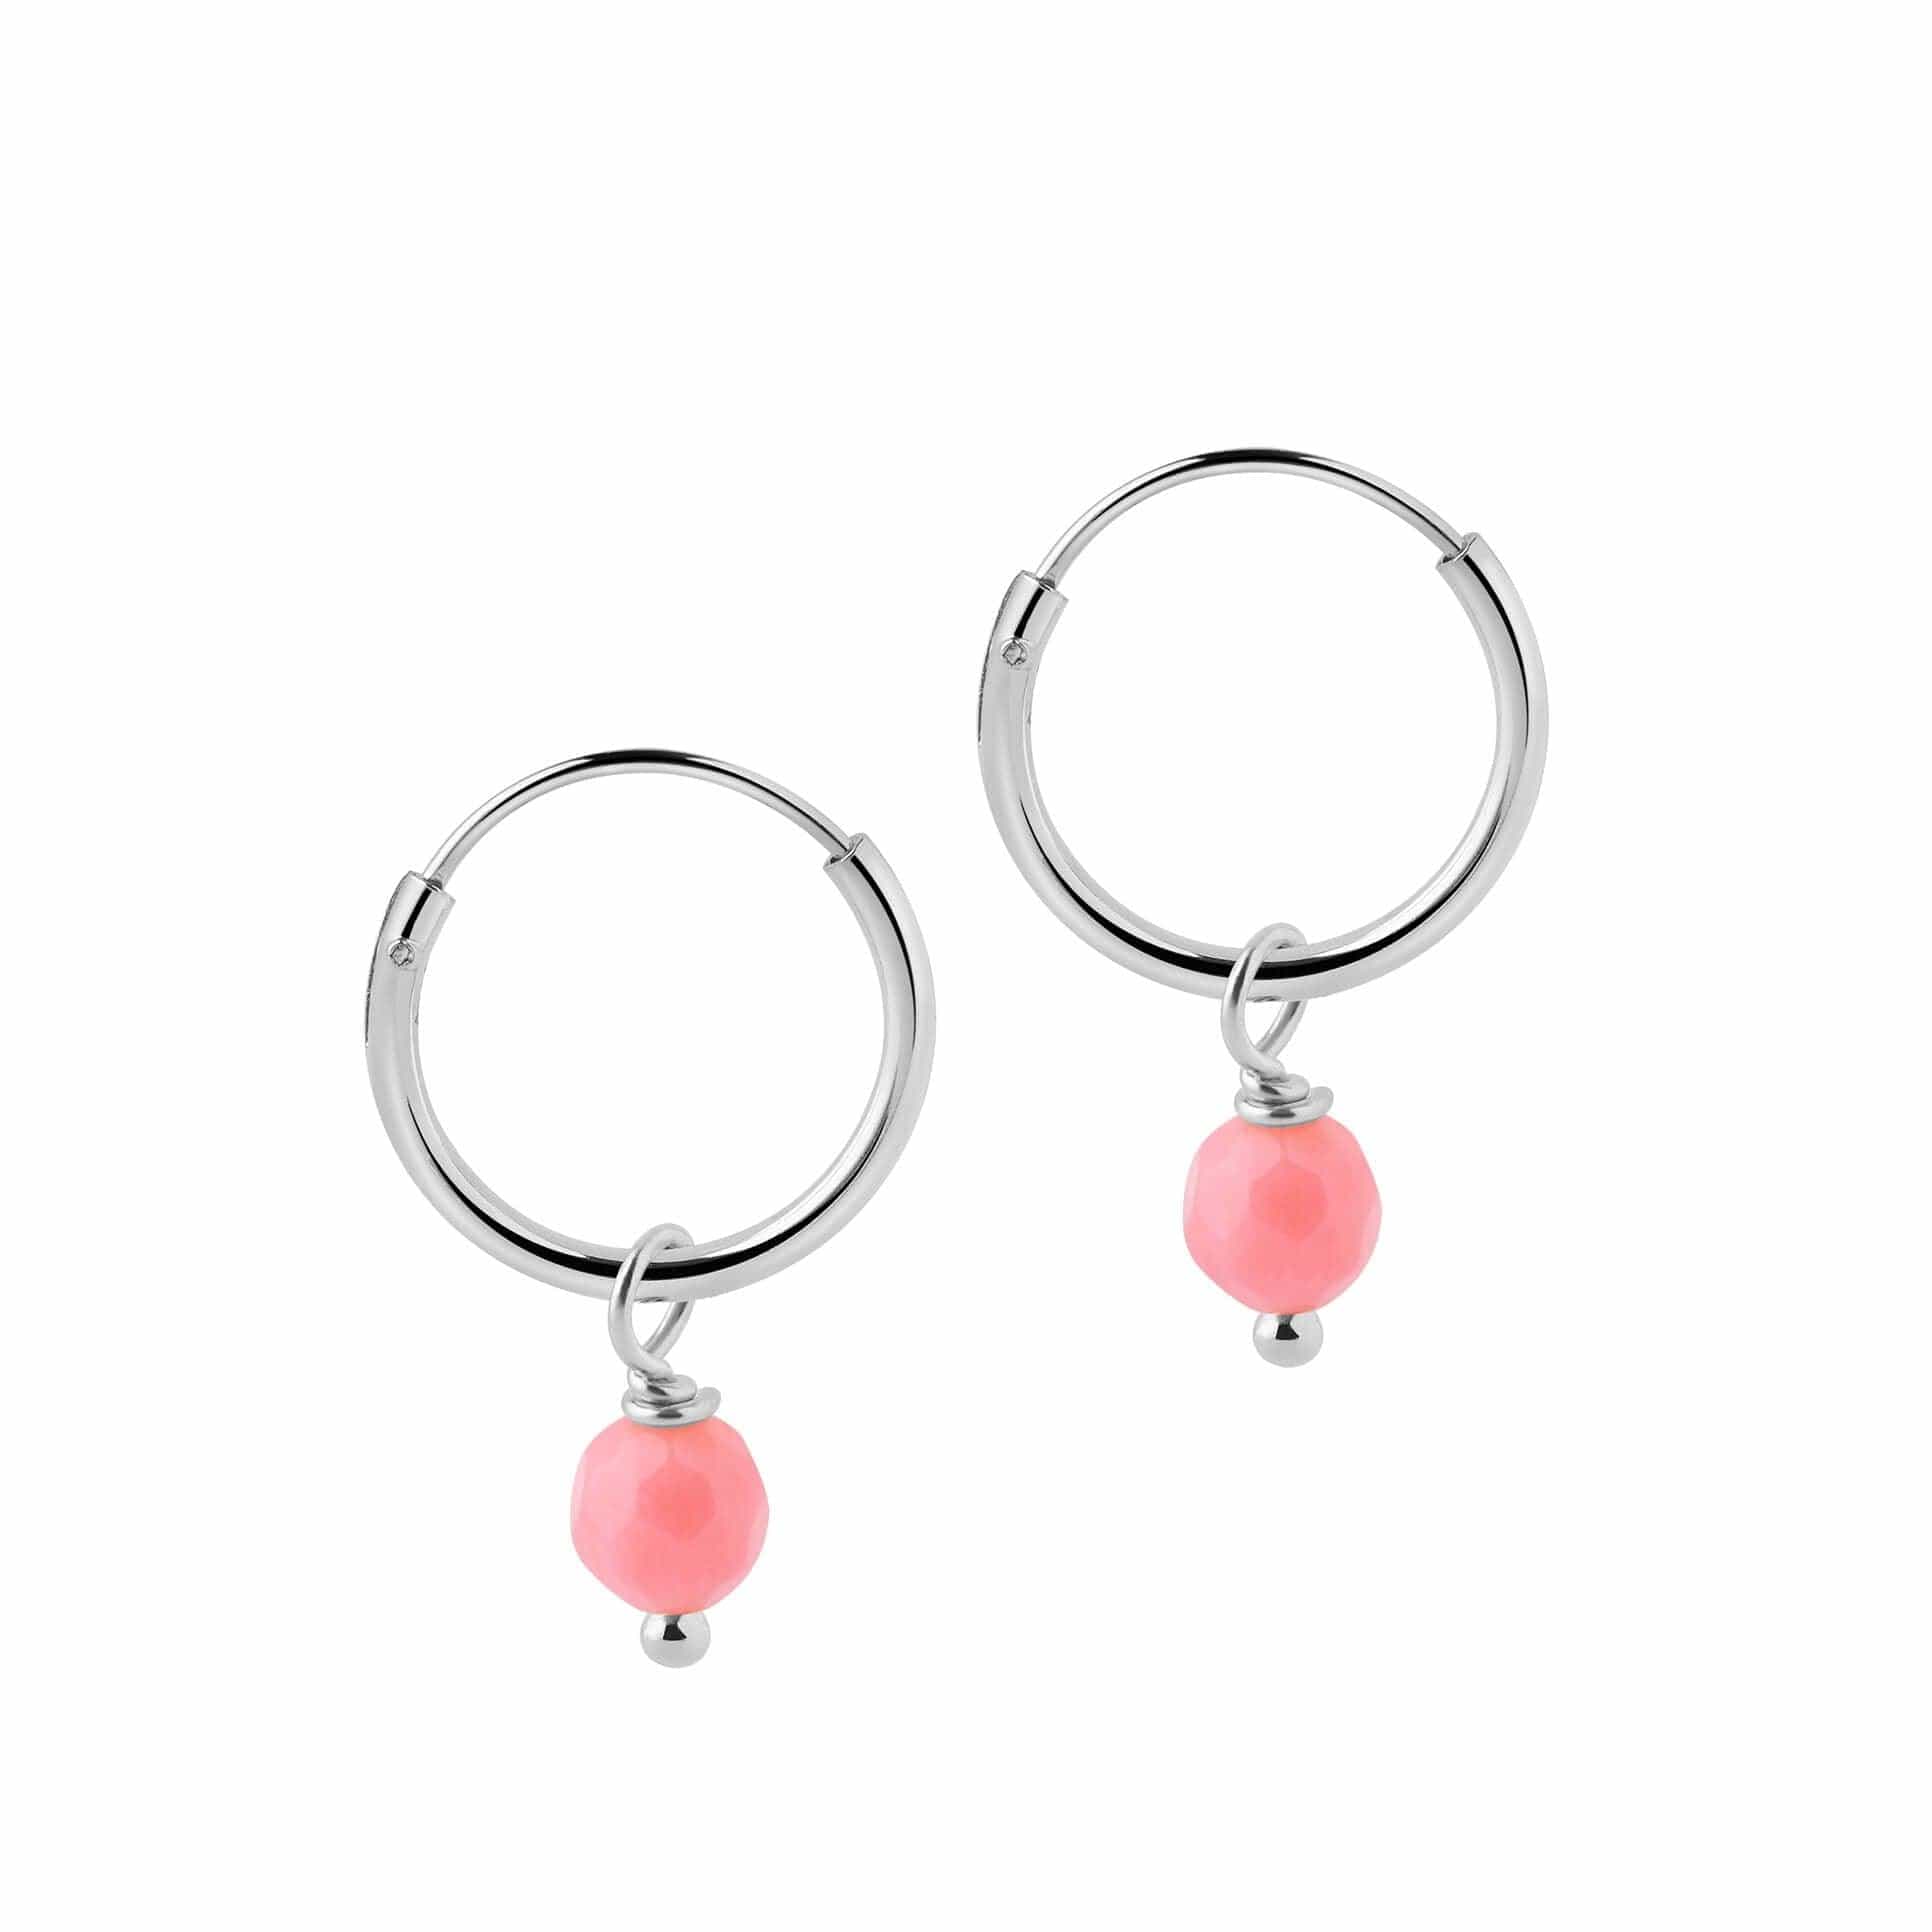 Silver Hoop Earrings with Pink Stone